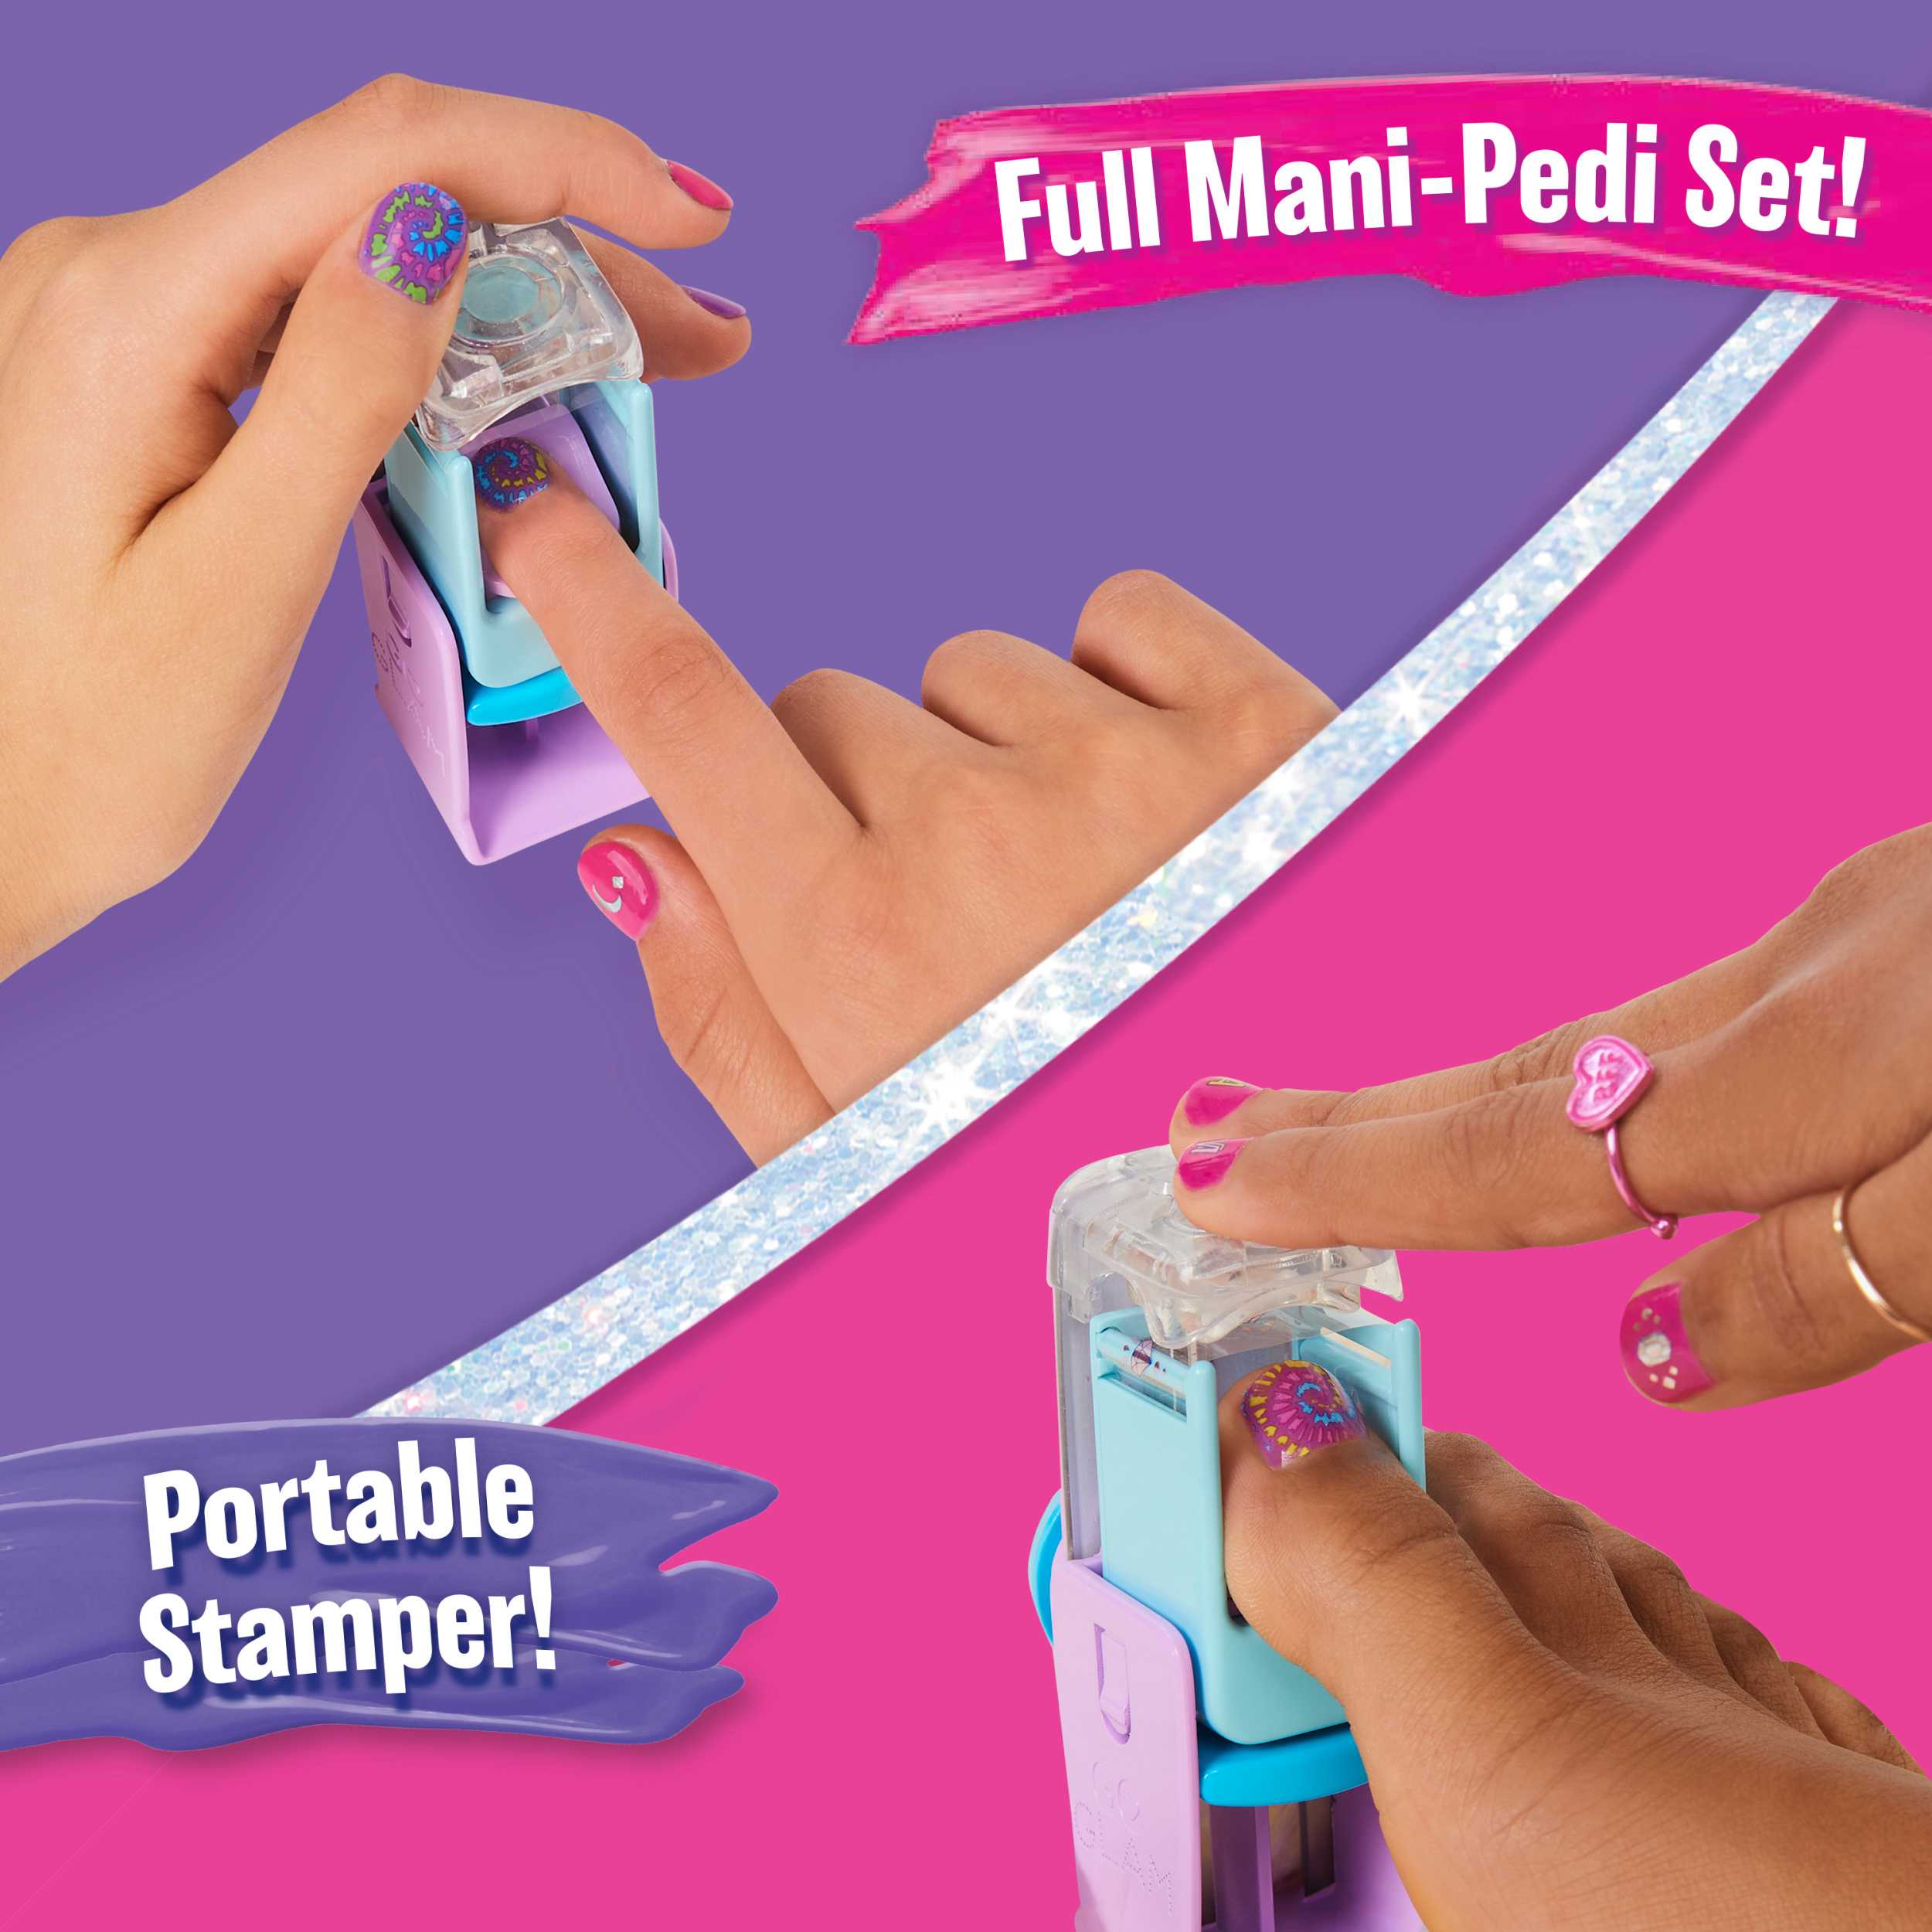 GO GLAM U-nique Nail Salon with Portable Stamper